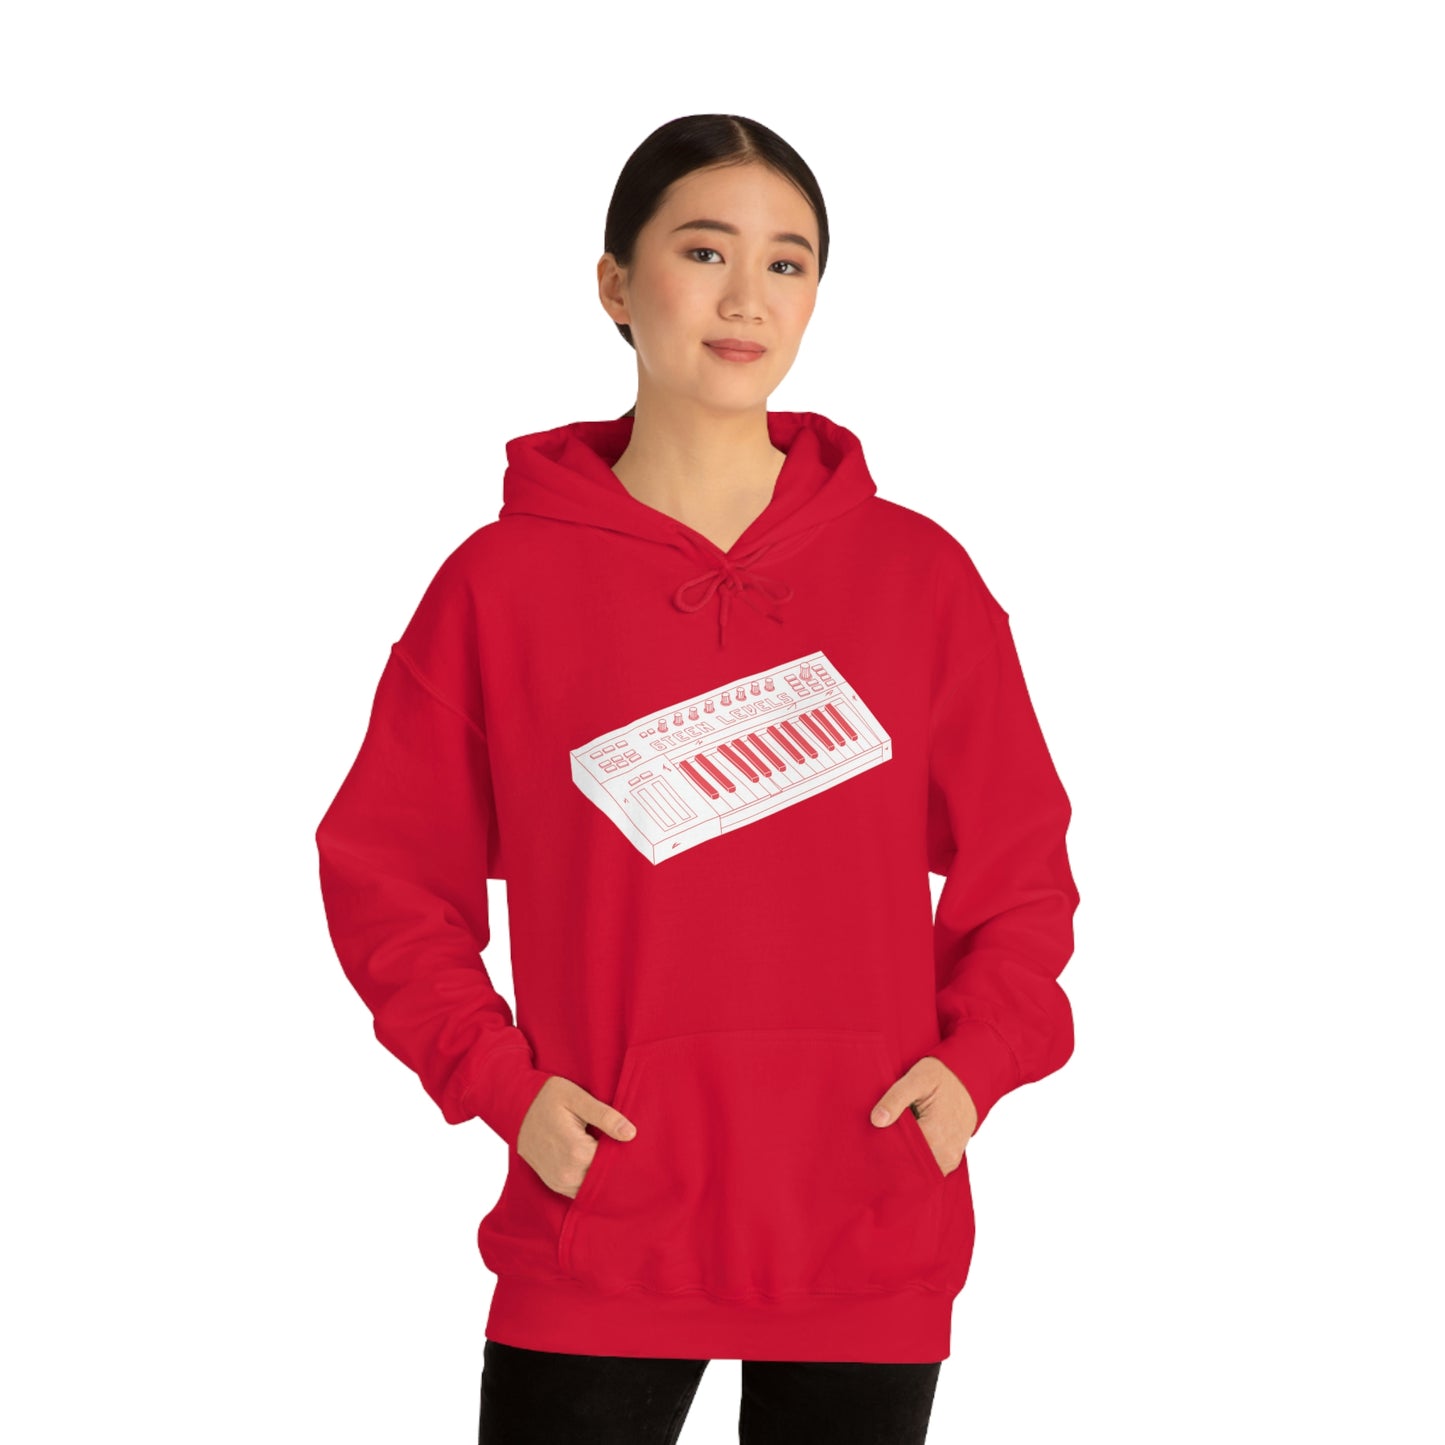 MidiCrew Red Hooded Sweatshirt